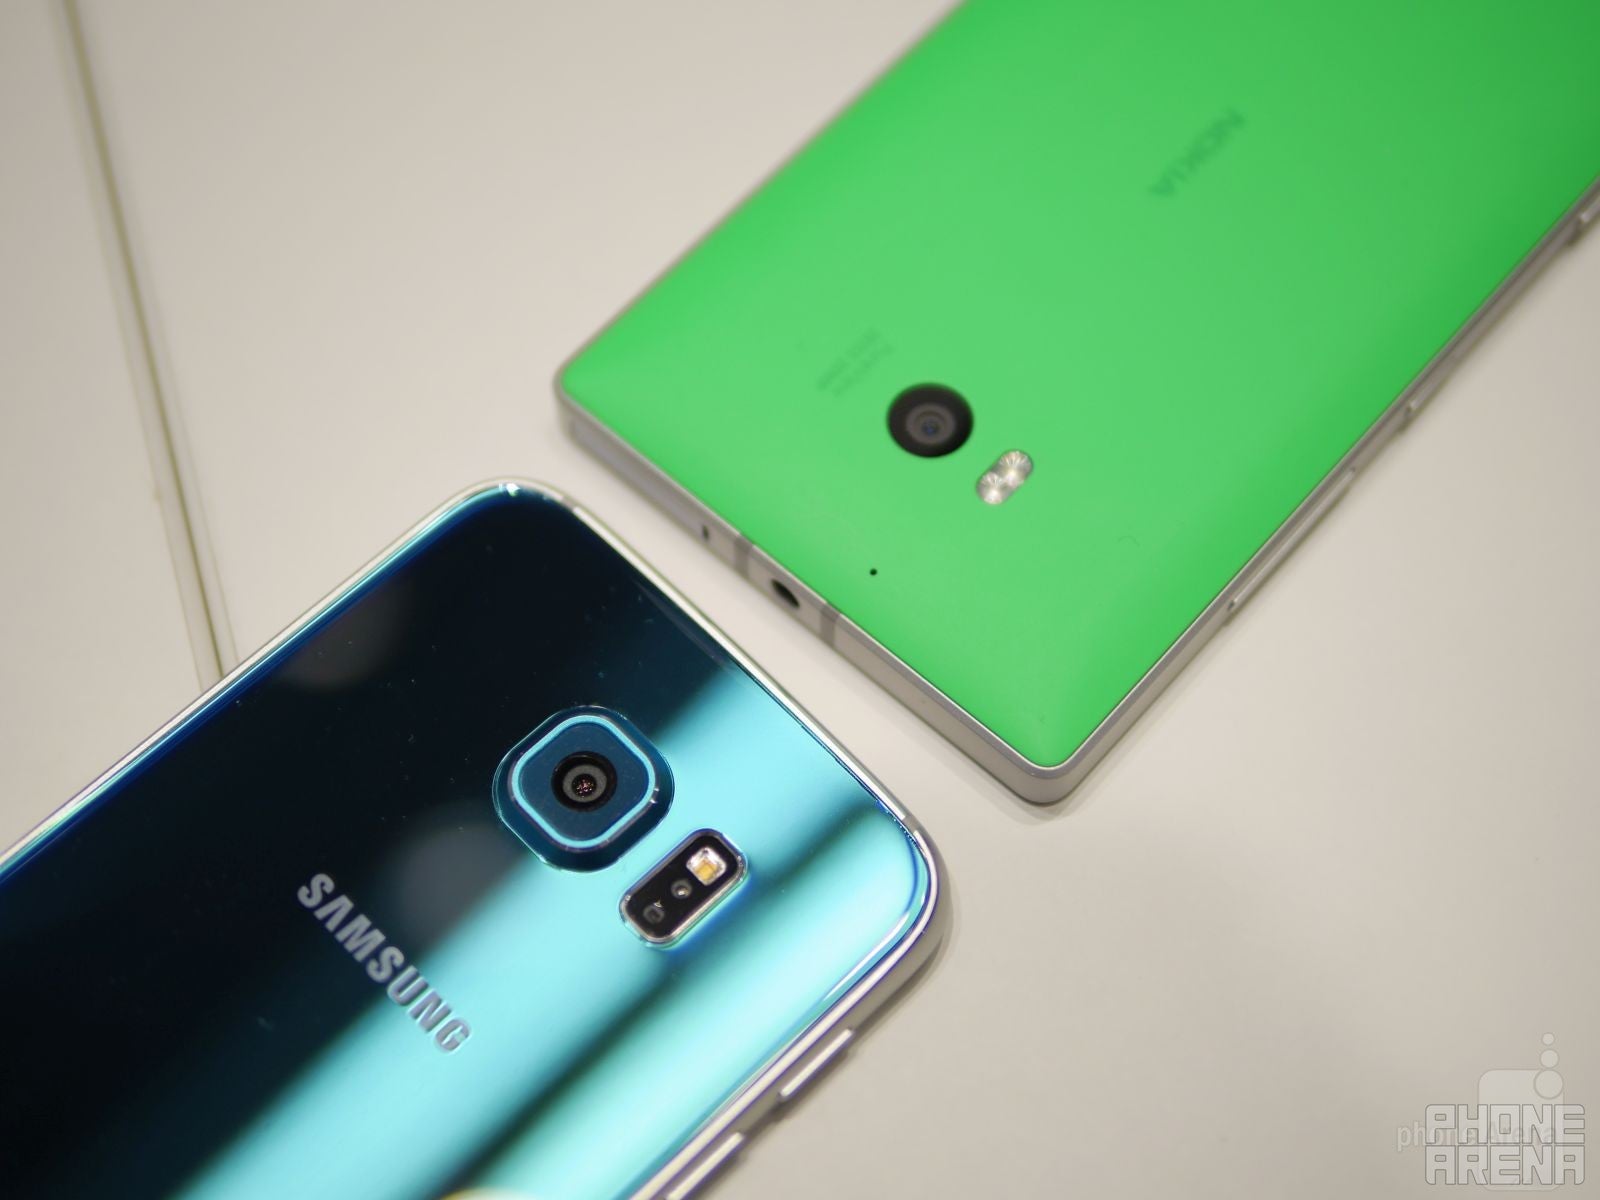 Samsung Galaxy S6 versus Nokia Lumia 930: first look